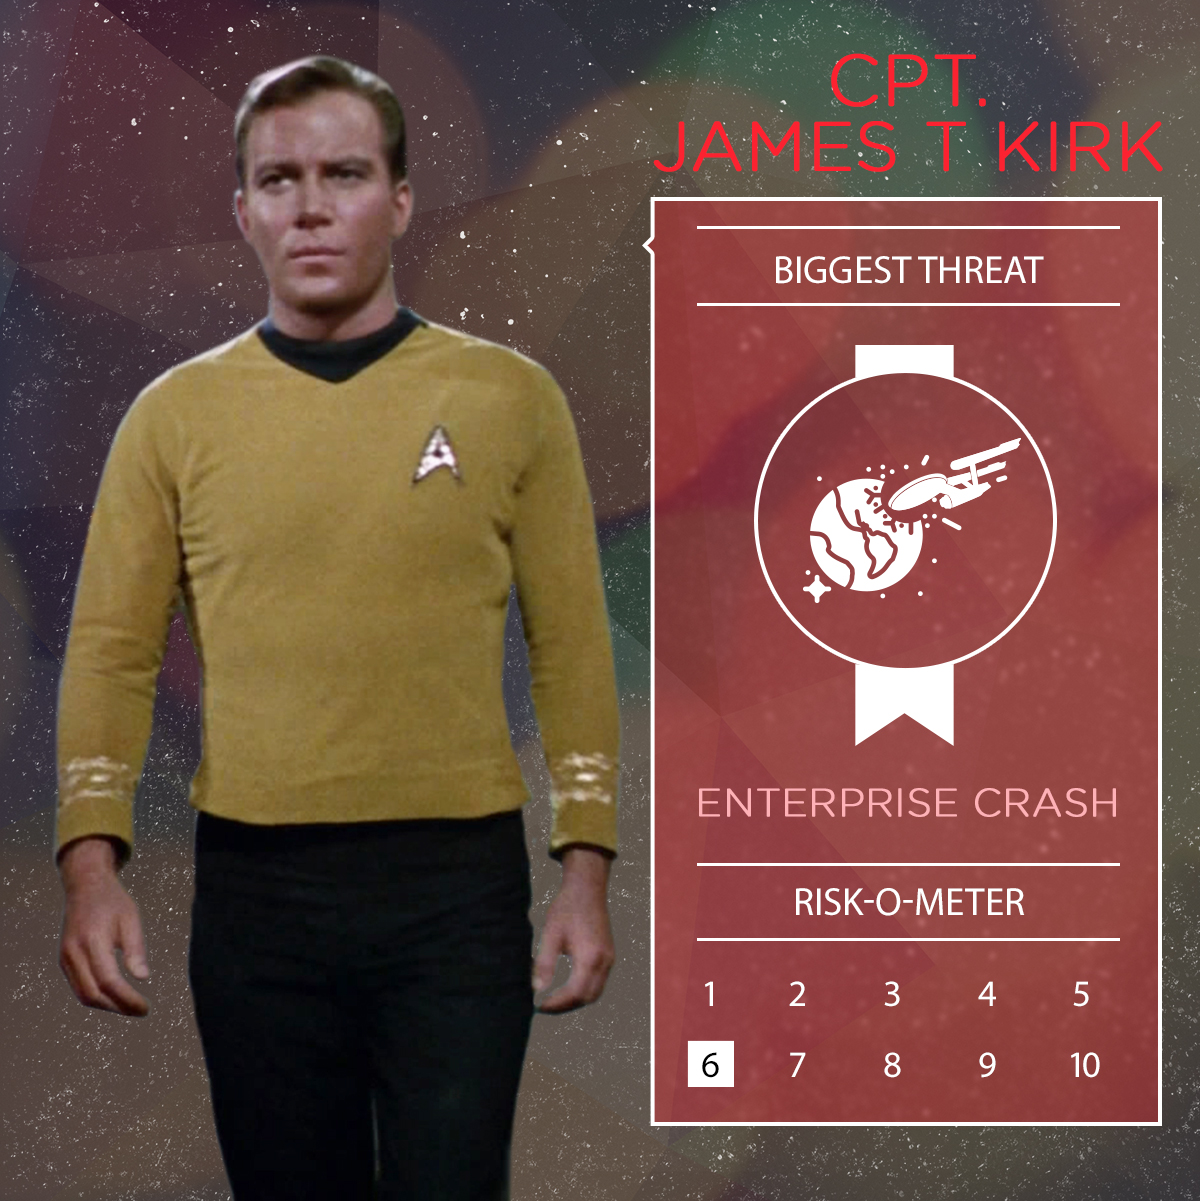 Captain James Kirk - Life Insurance